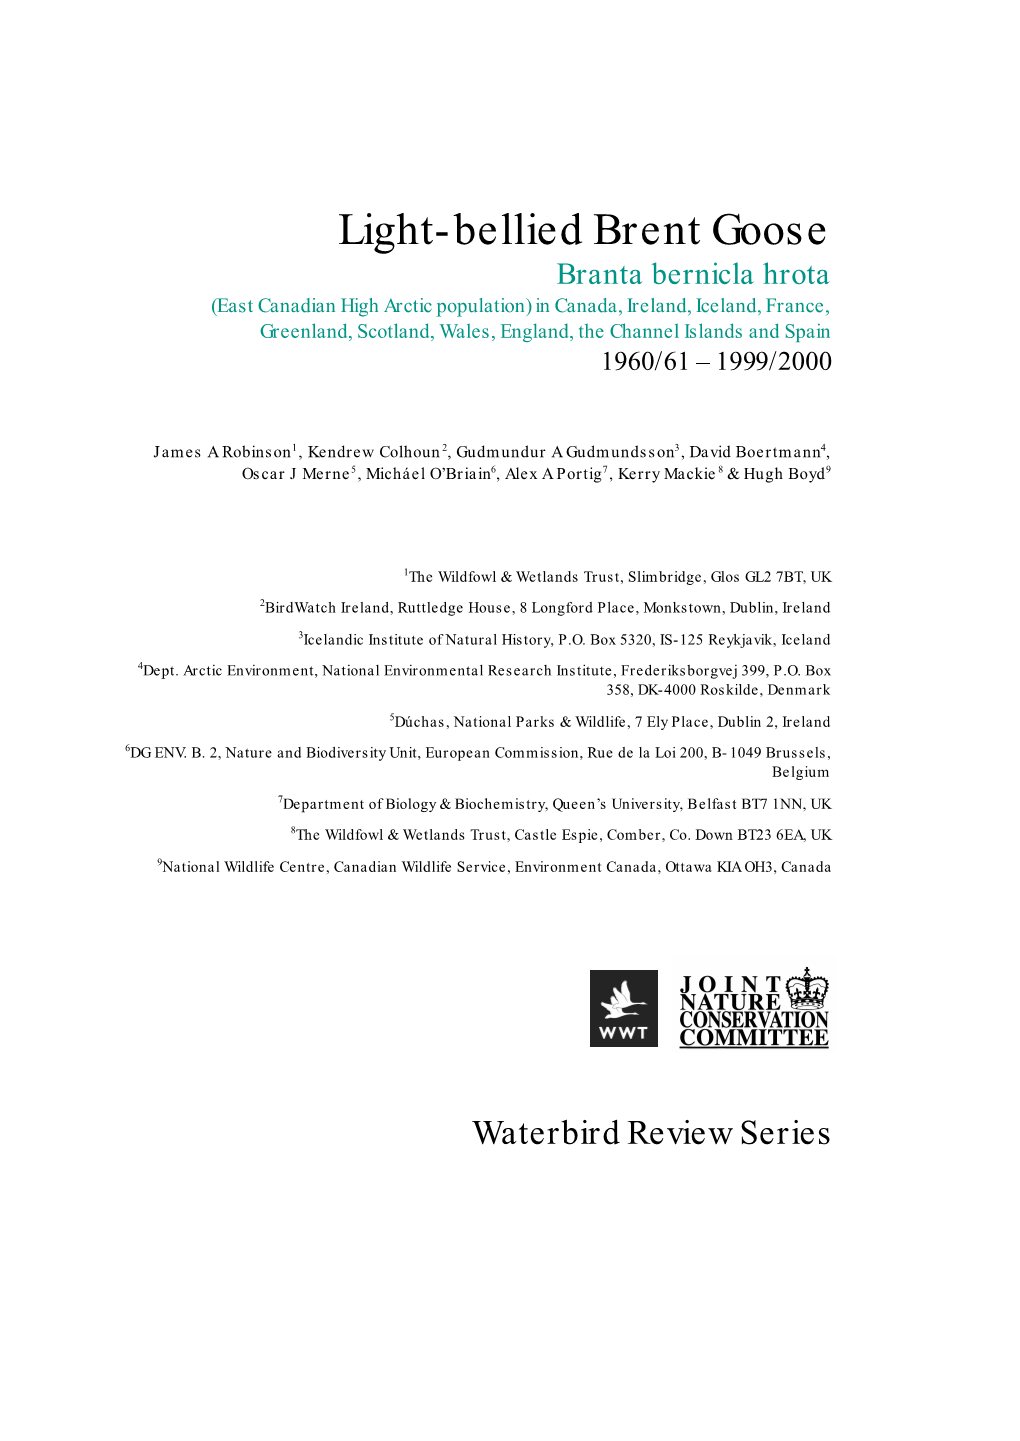 Canadian Light-Bellied Brent Goose